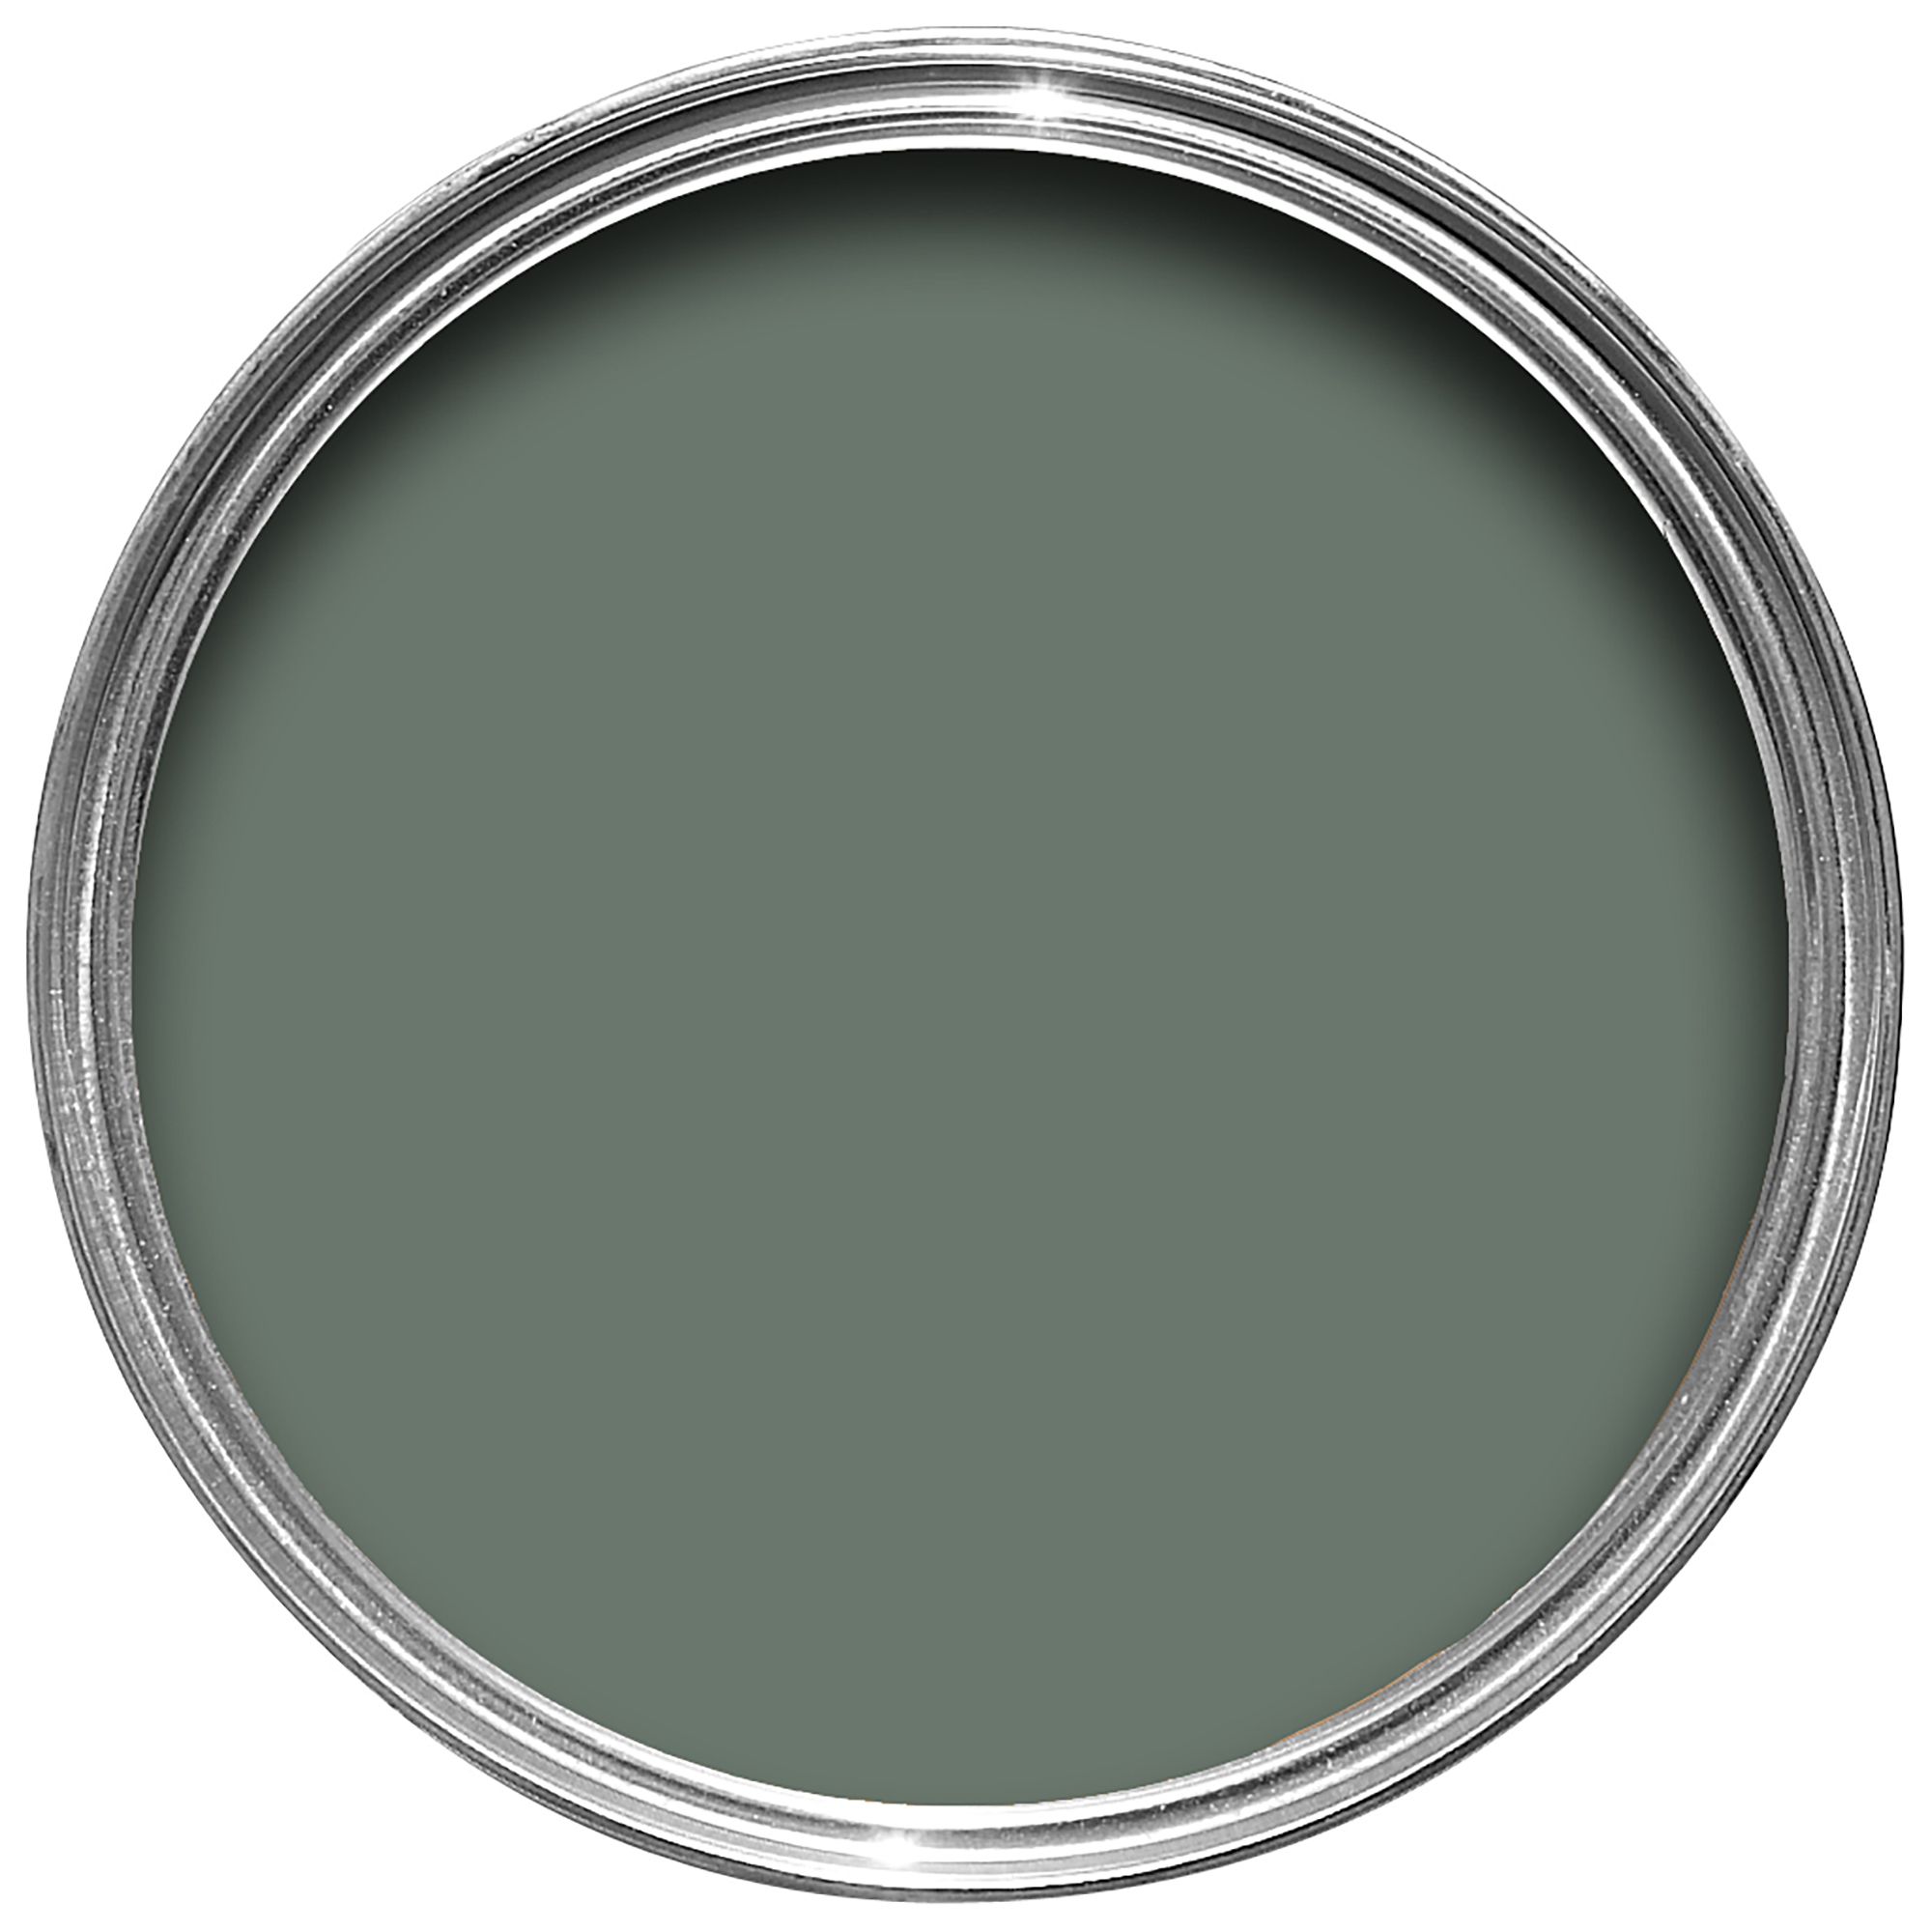 Farrow & Ball Modern Green Smoke No.47 Eggshell Paint, 750ml